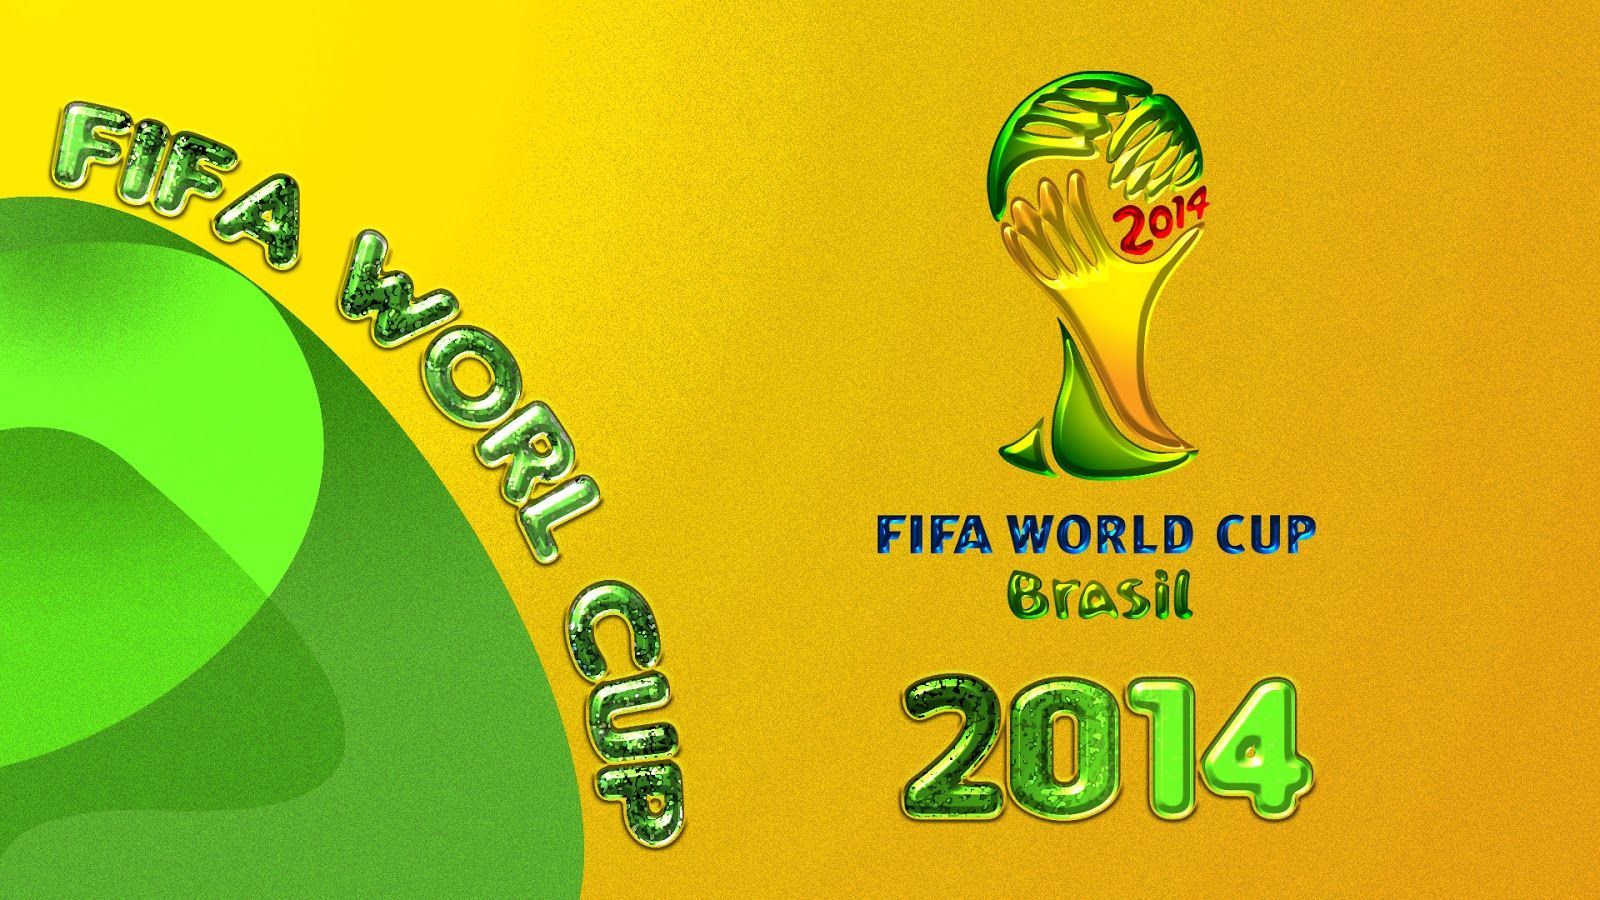 fifa world cup 2014 brazil wallpaper. World cup World cup, Fifa world cup